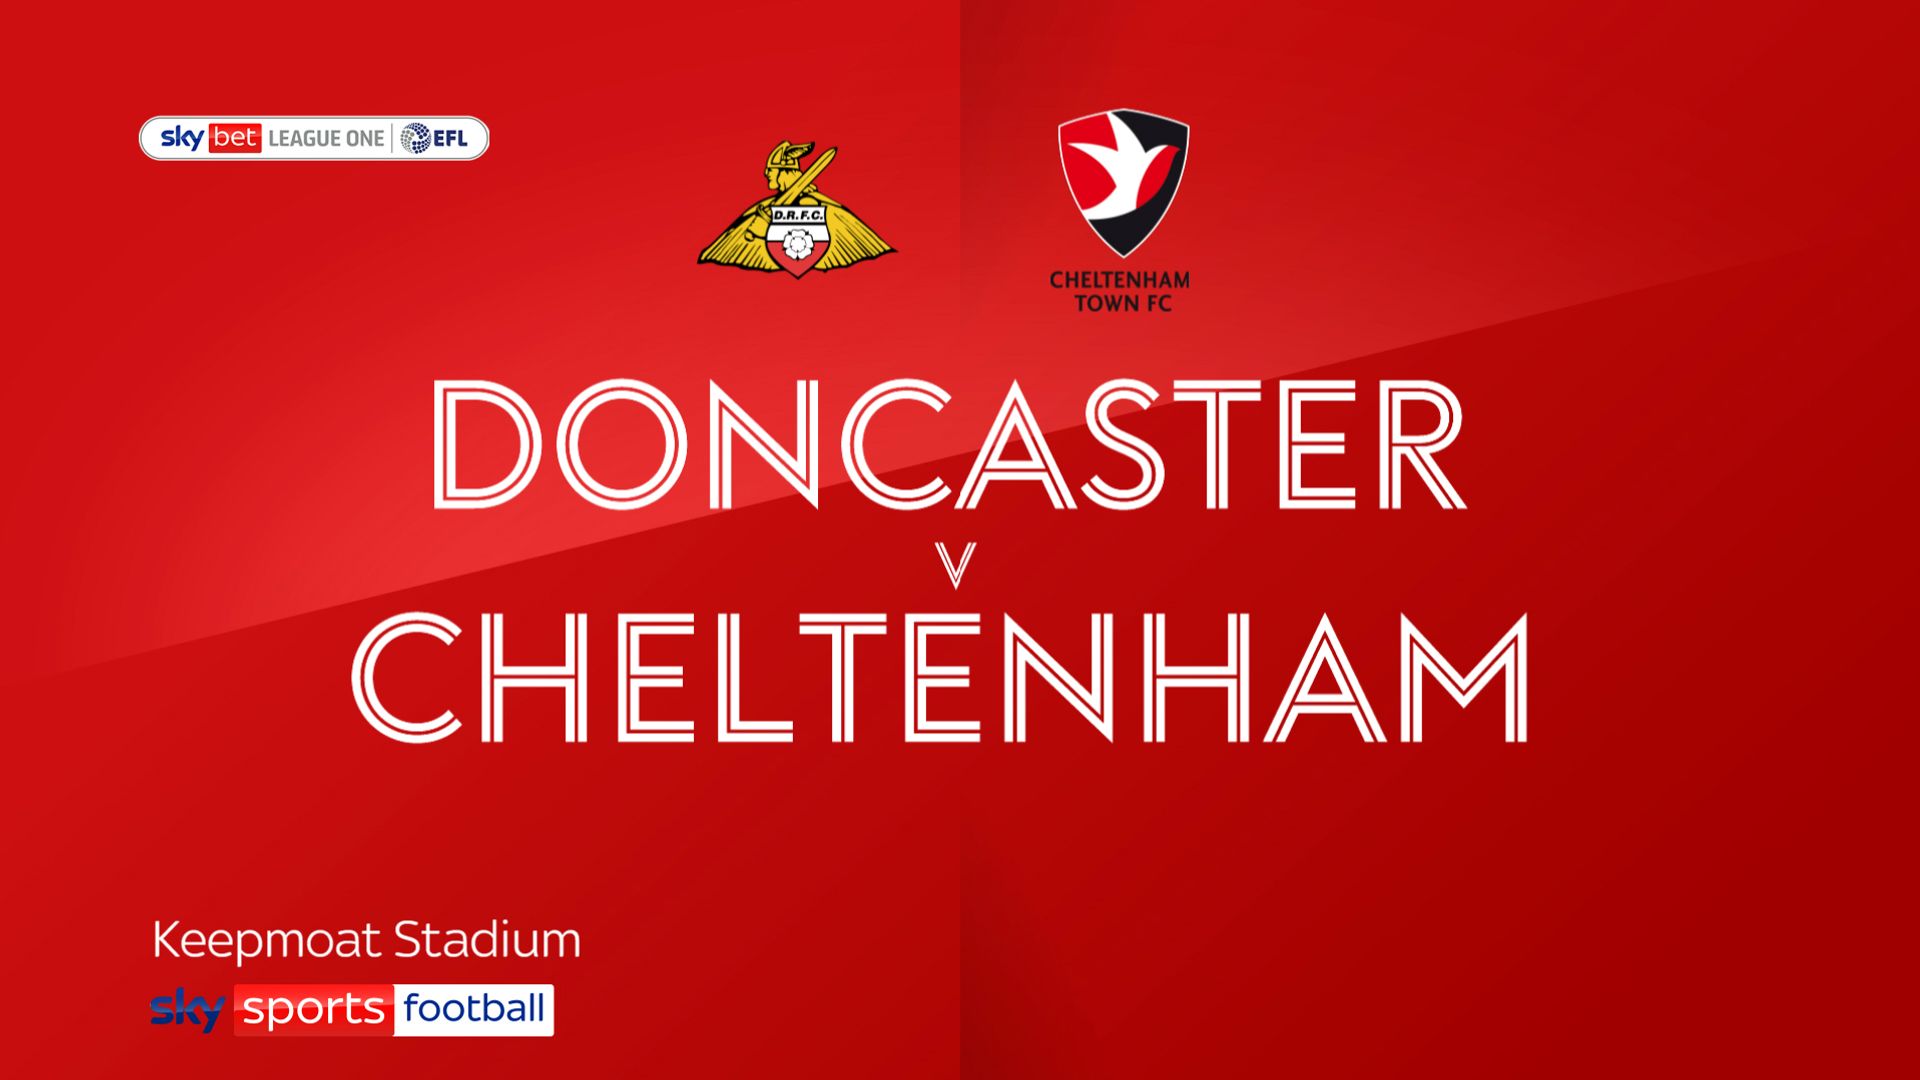 Doncaster off bottom after Cheltenham win